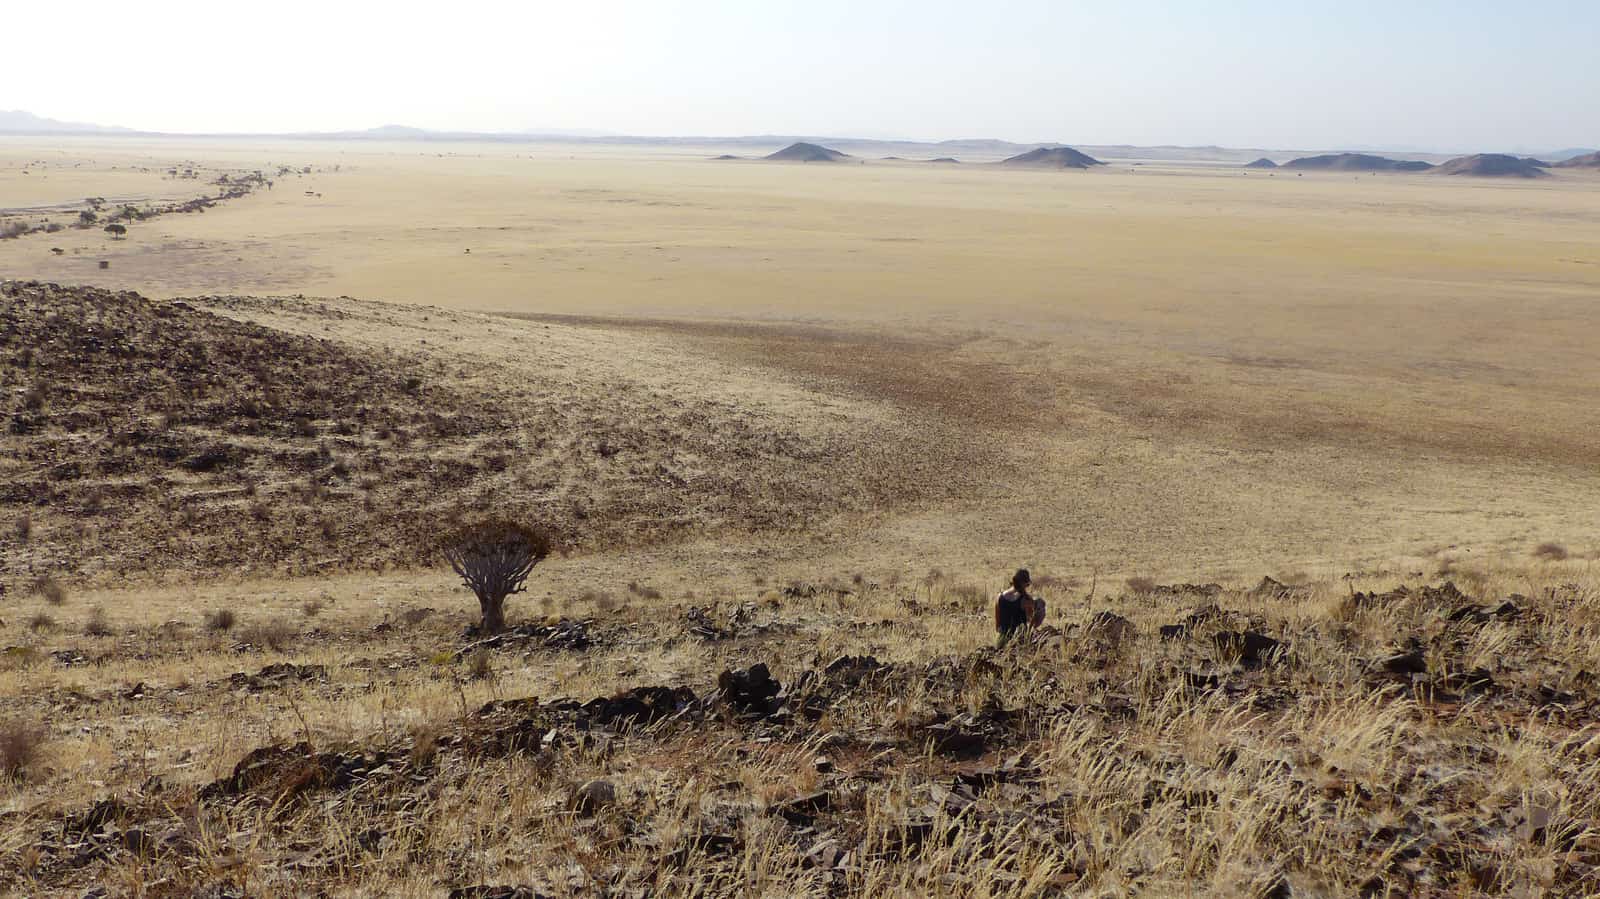 Hiking in the Tiras Mountains of Namibia